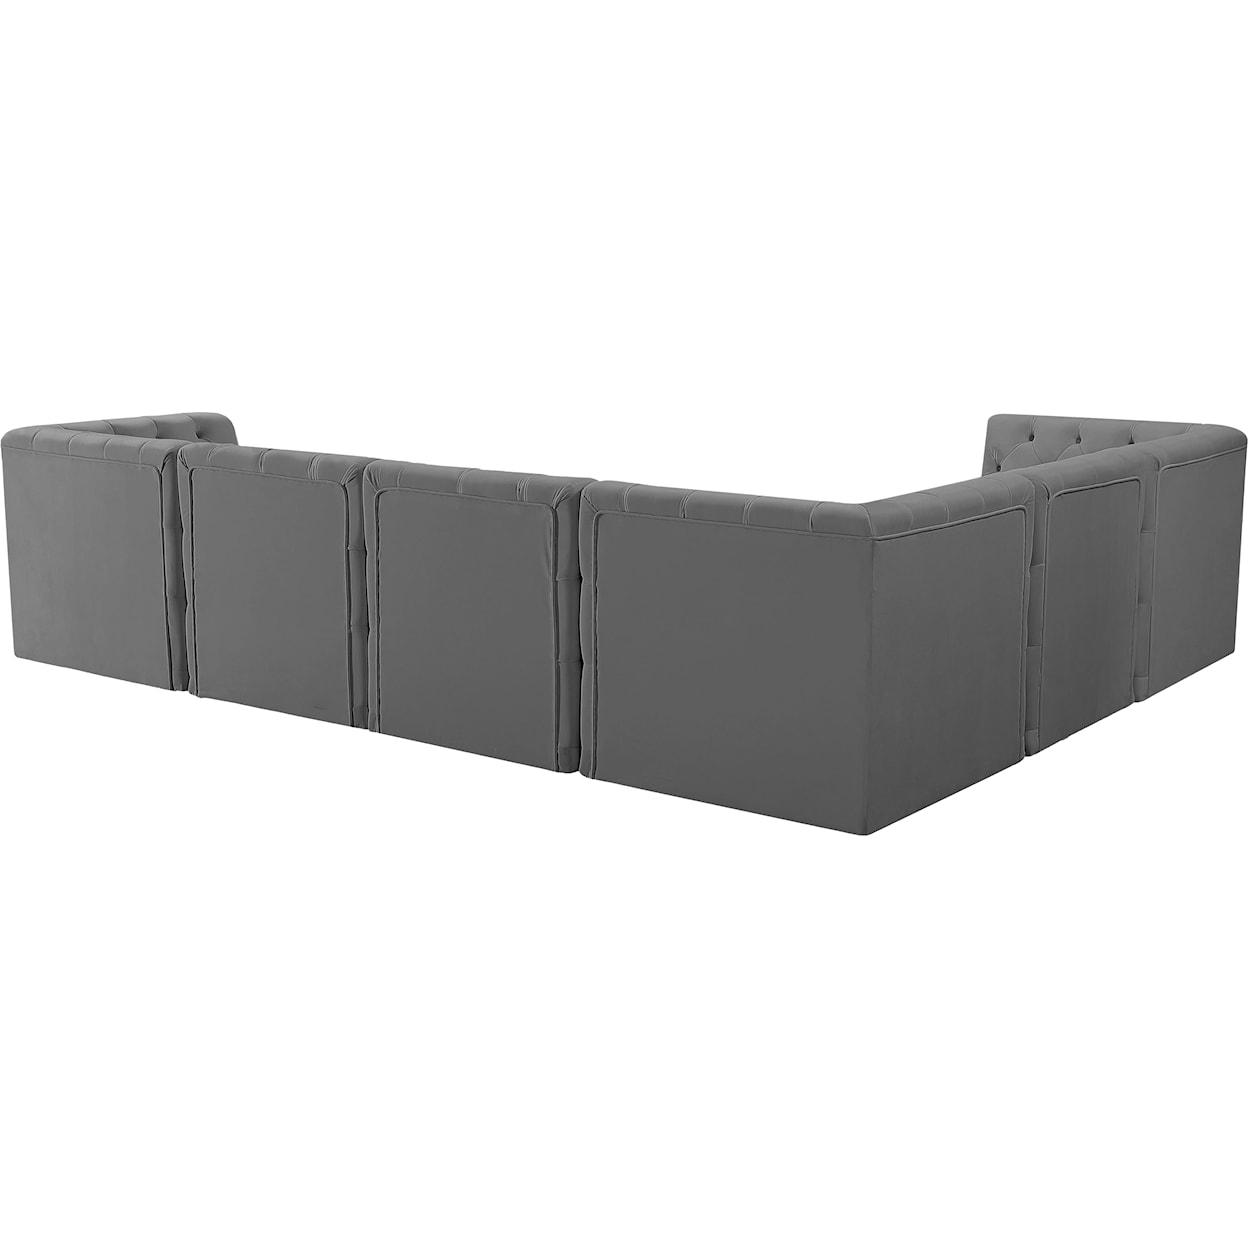 Meridian Furniture Tuft Modular Sectional